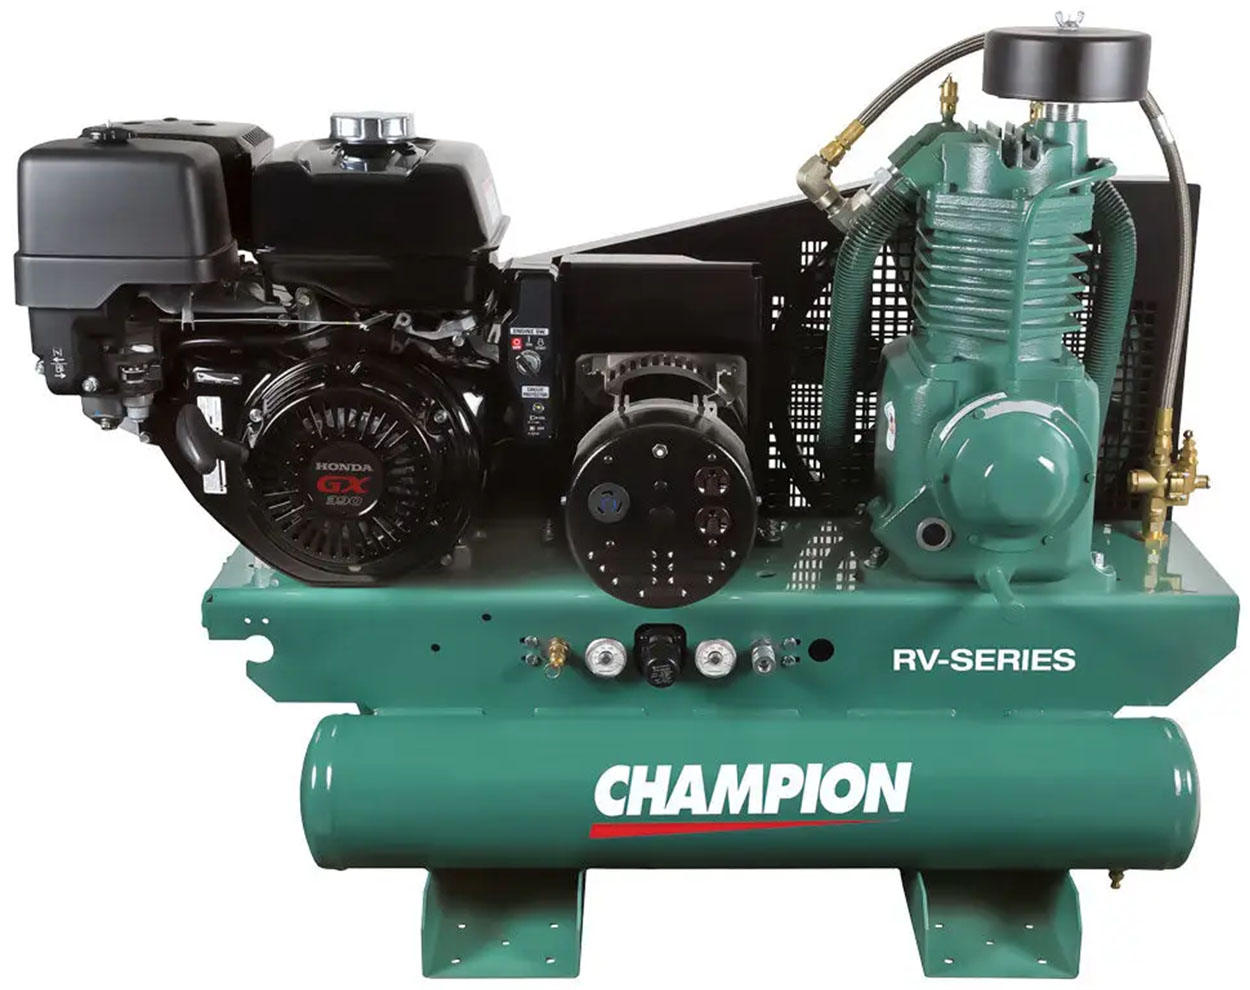 Champion Centurion II Two Stage Piston Air Compressor and Generator | Gas Powered Compressors Compressor